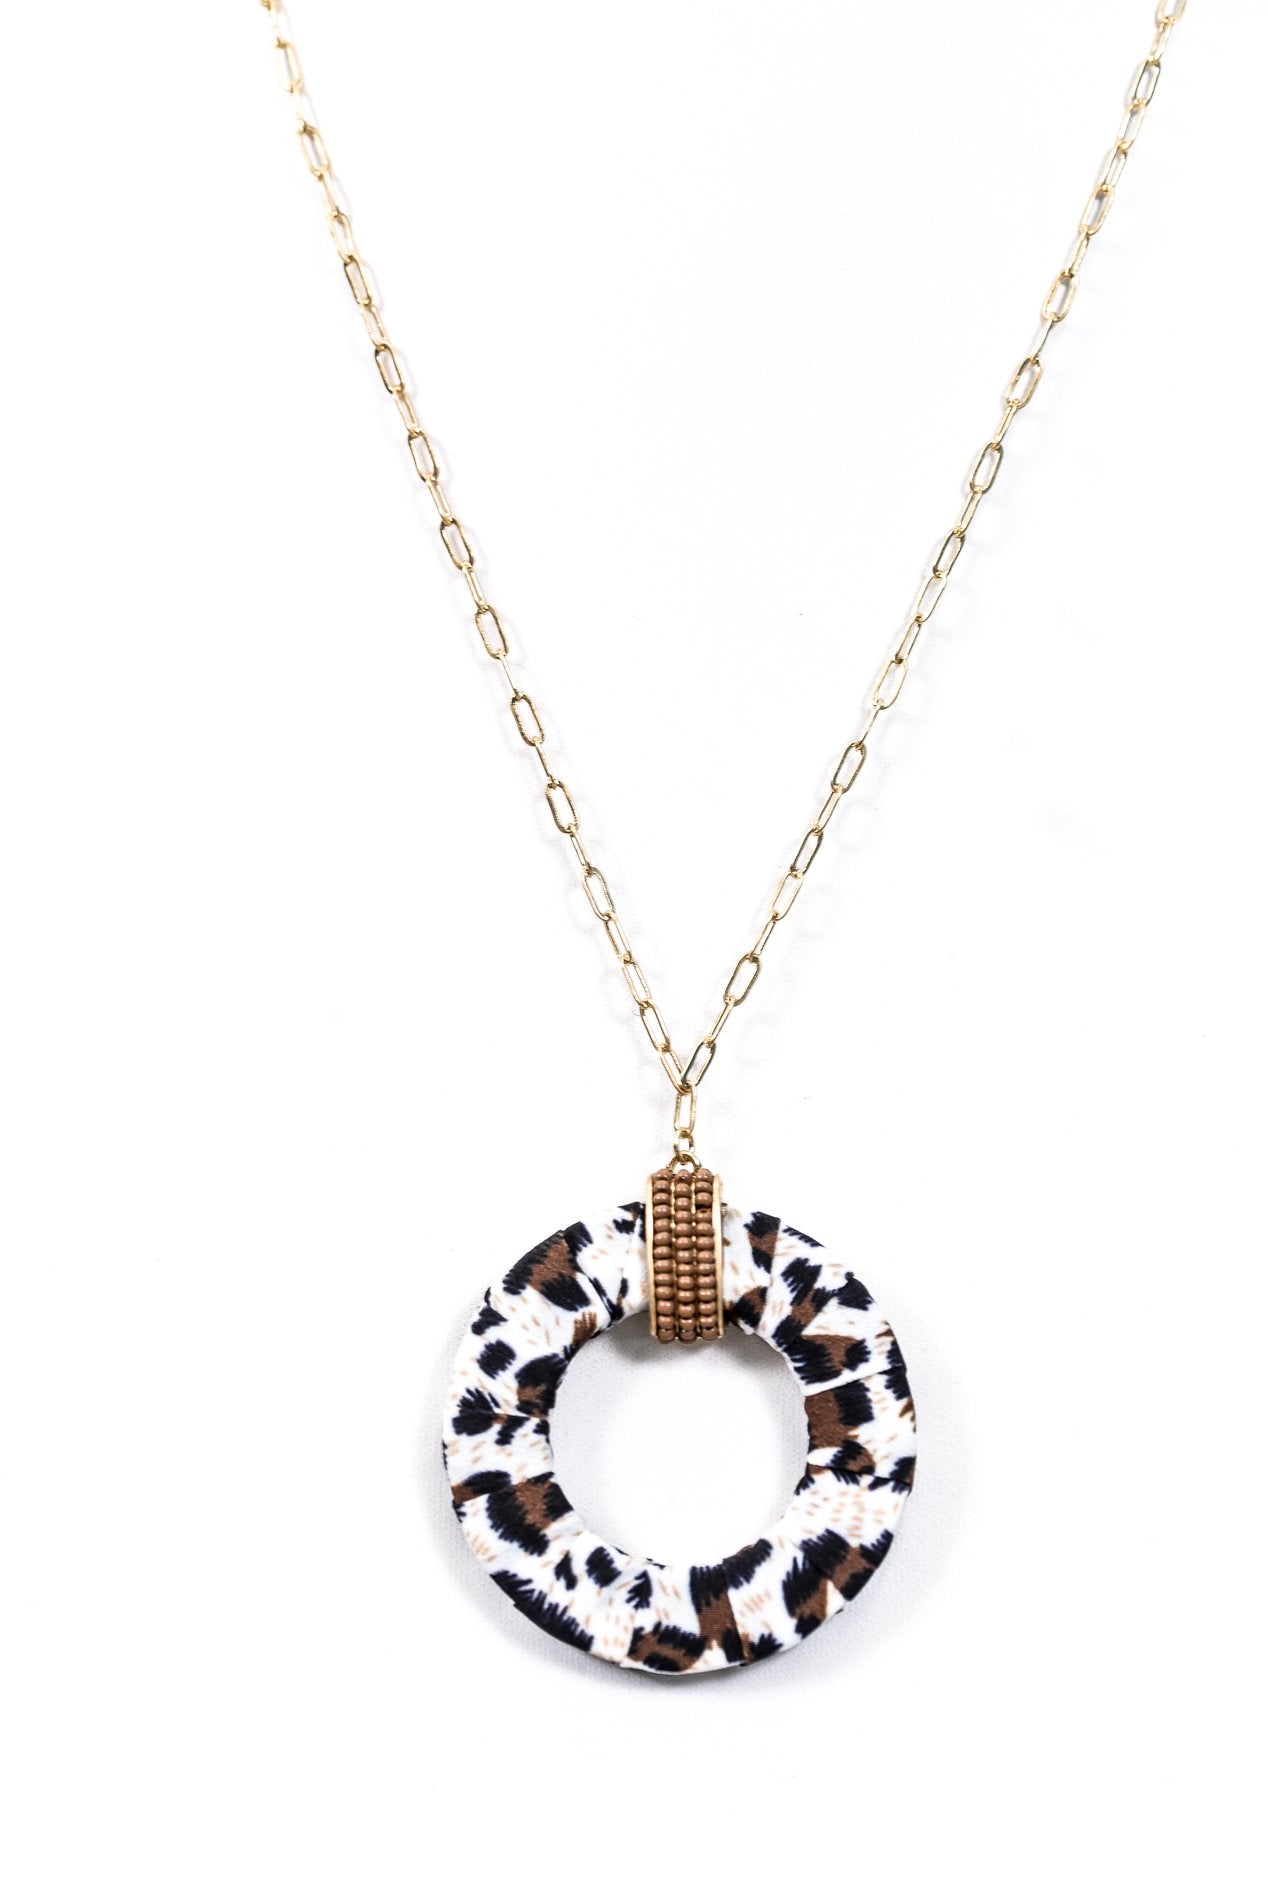 Ivory/Black/Brown/Seed Bead/Circle Pendant Necklace - NEK2809IV